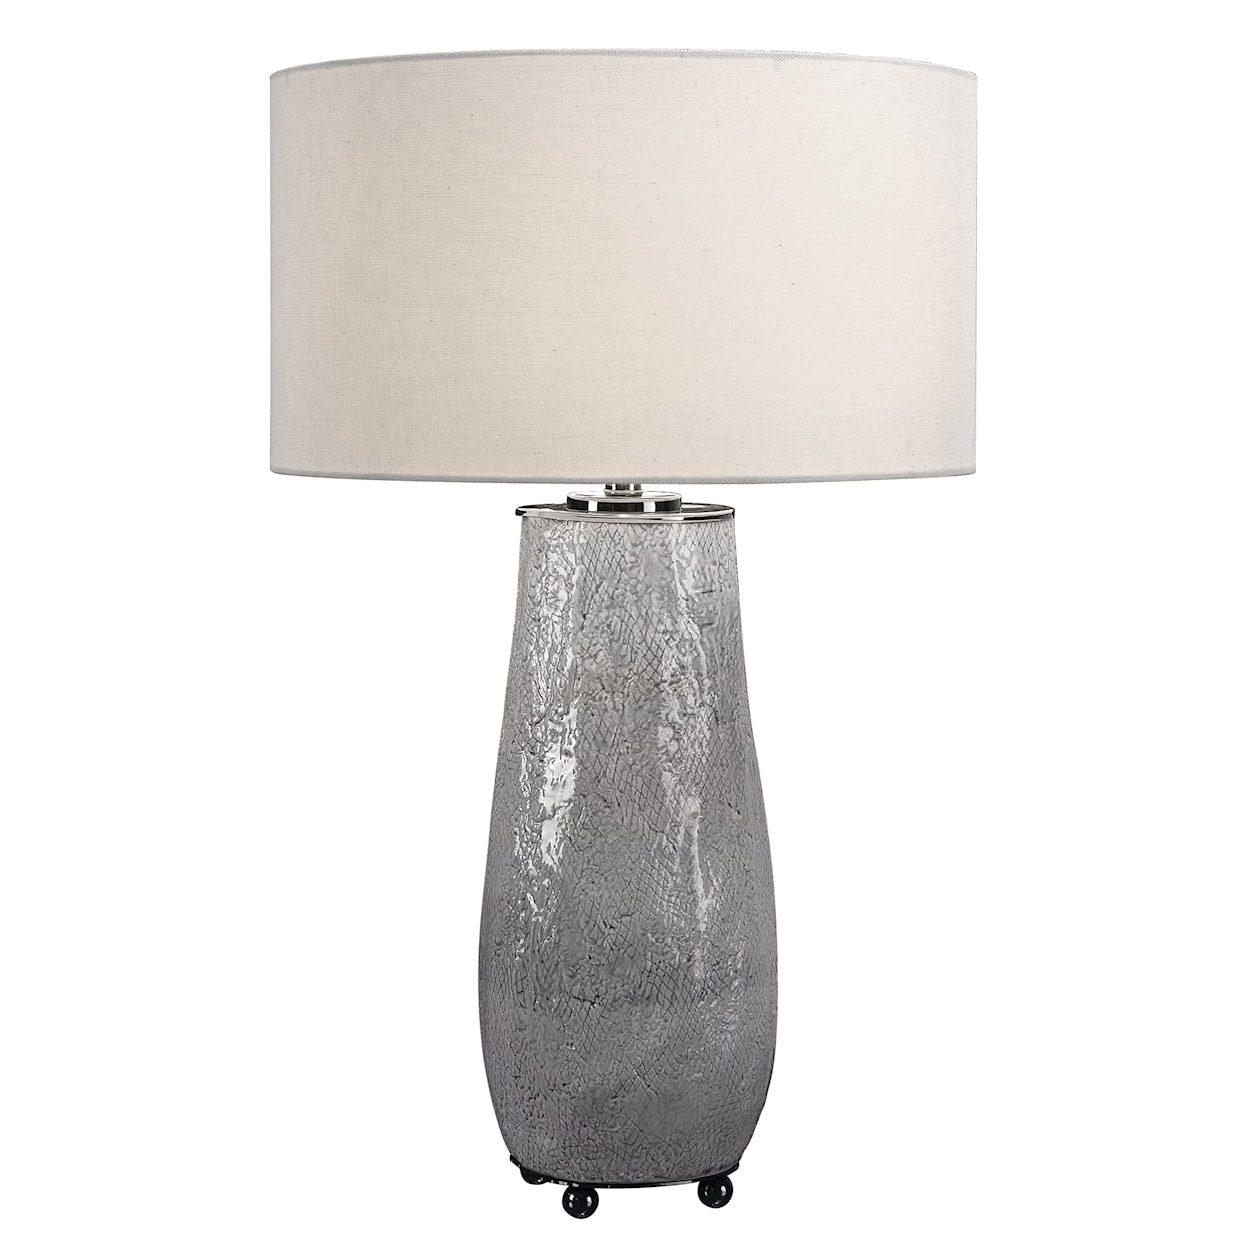 Uttermost Table Lamps Balkana Aged Gray Table Lamp